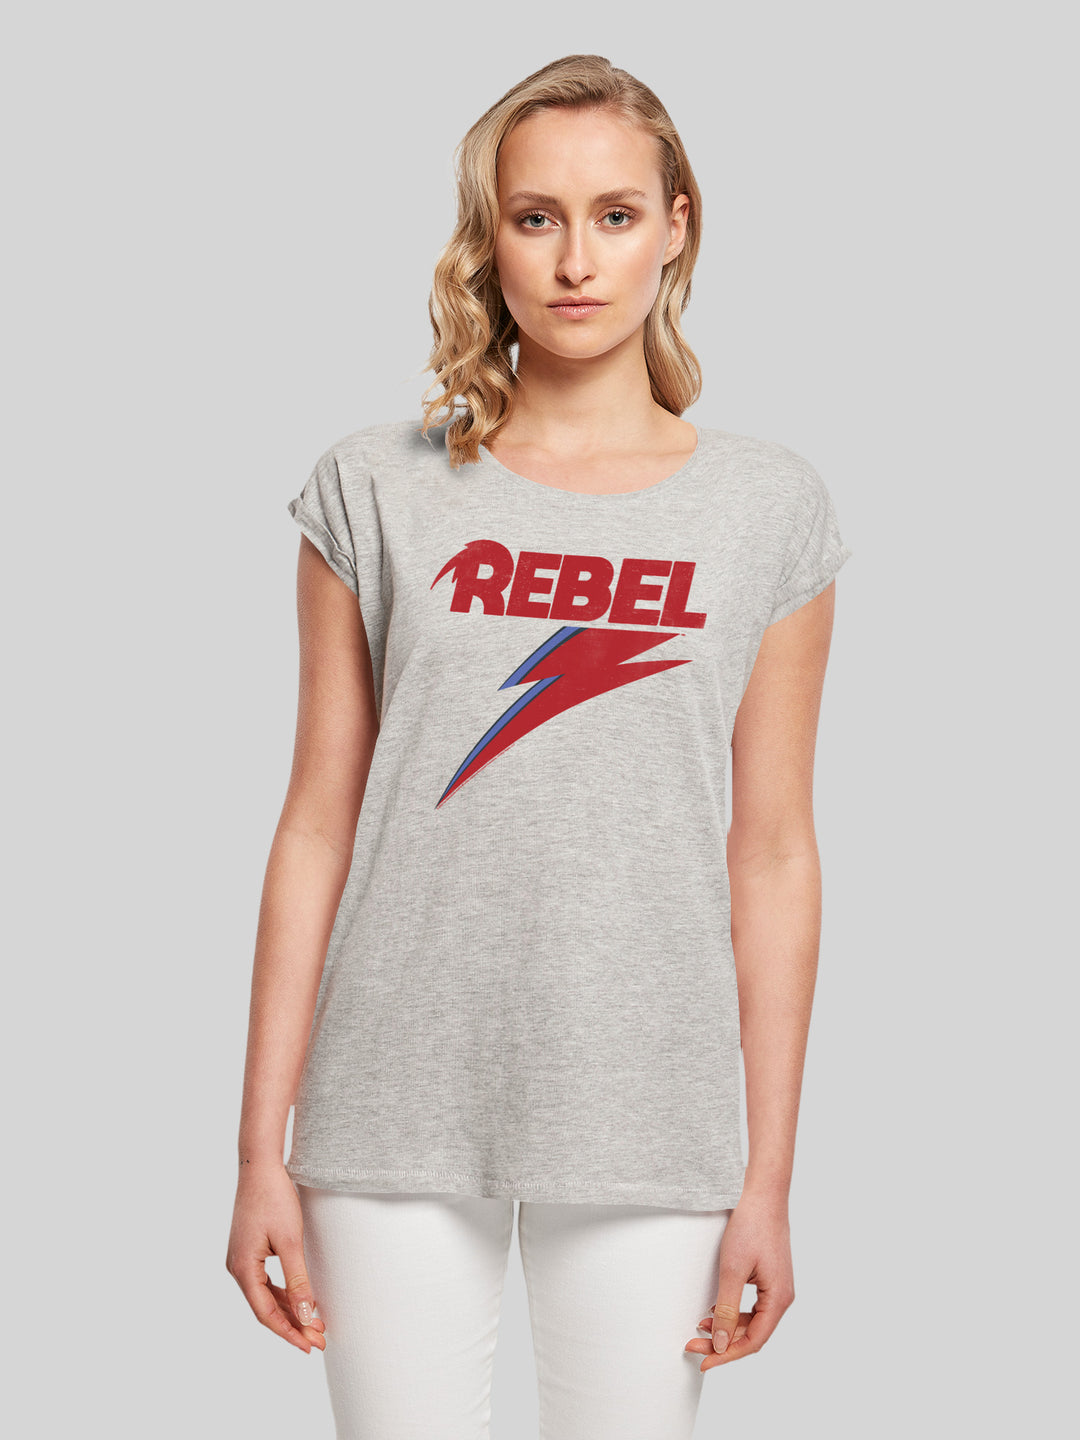 David Bowie T-Shirt | Distressed Rebel | Premium Short Sleeve Ladies Tee